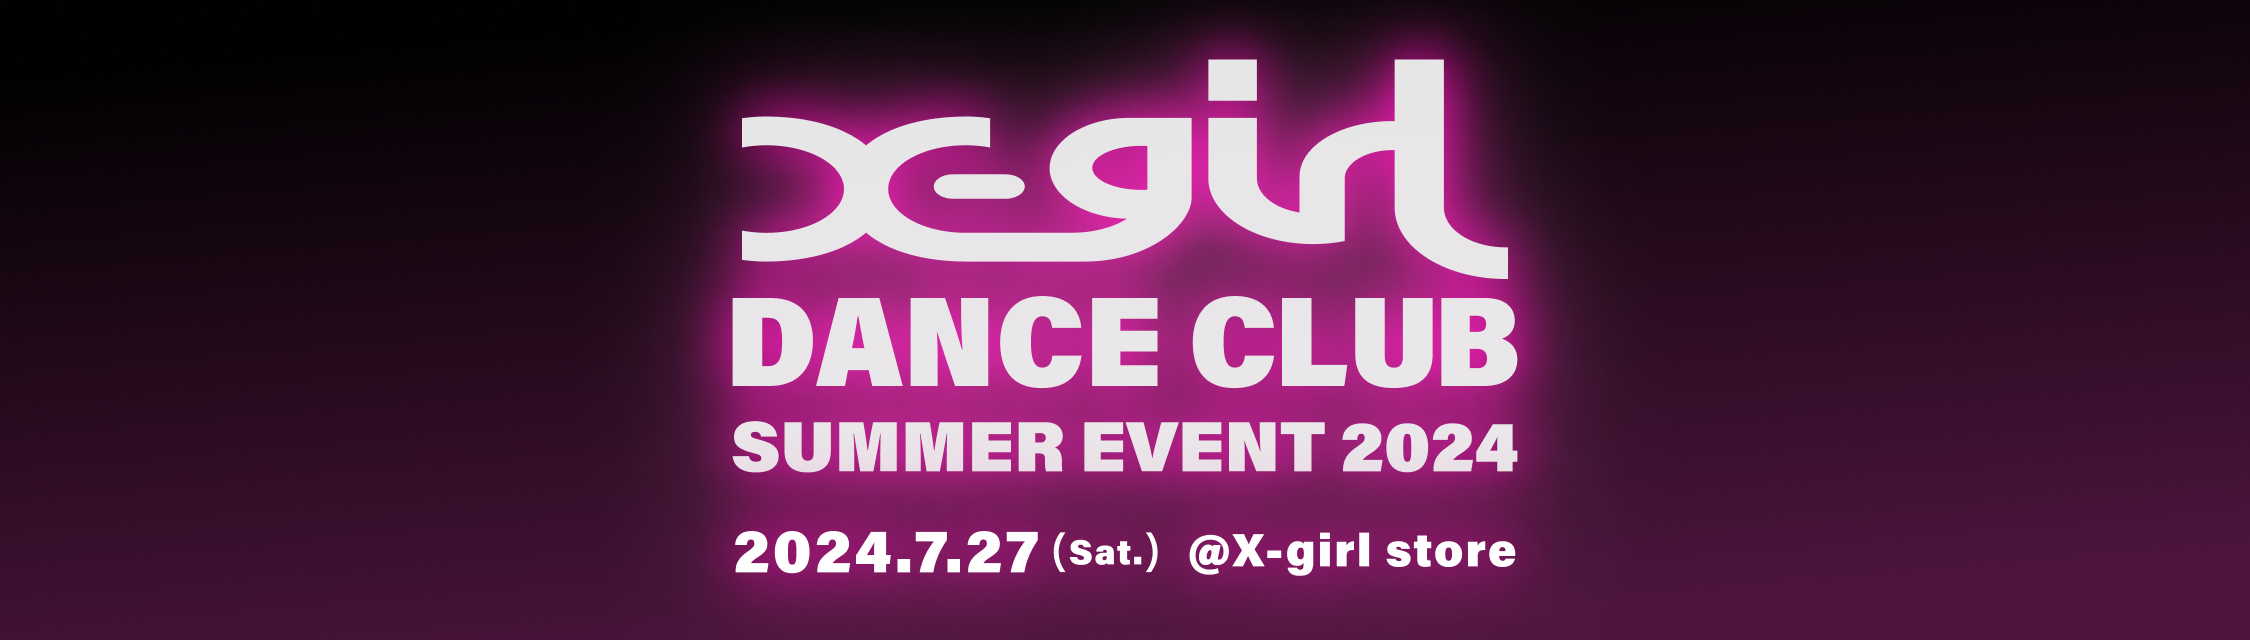 X-girl DANCE CLUB SUMMER EVENT 2024